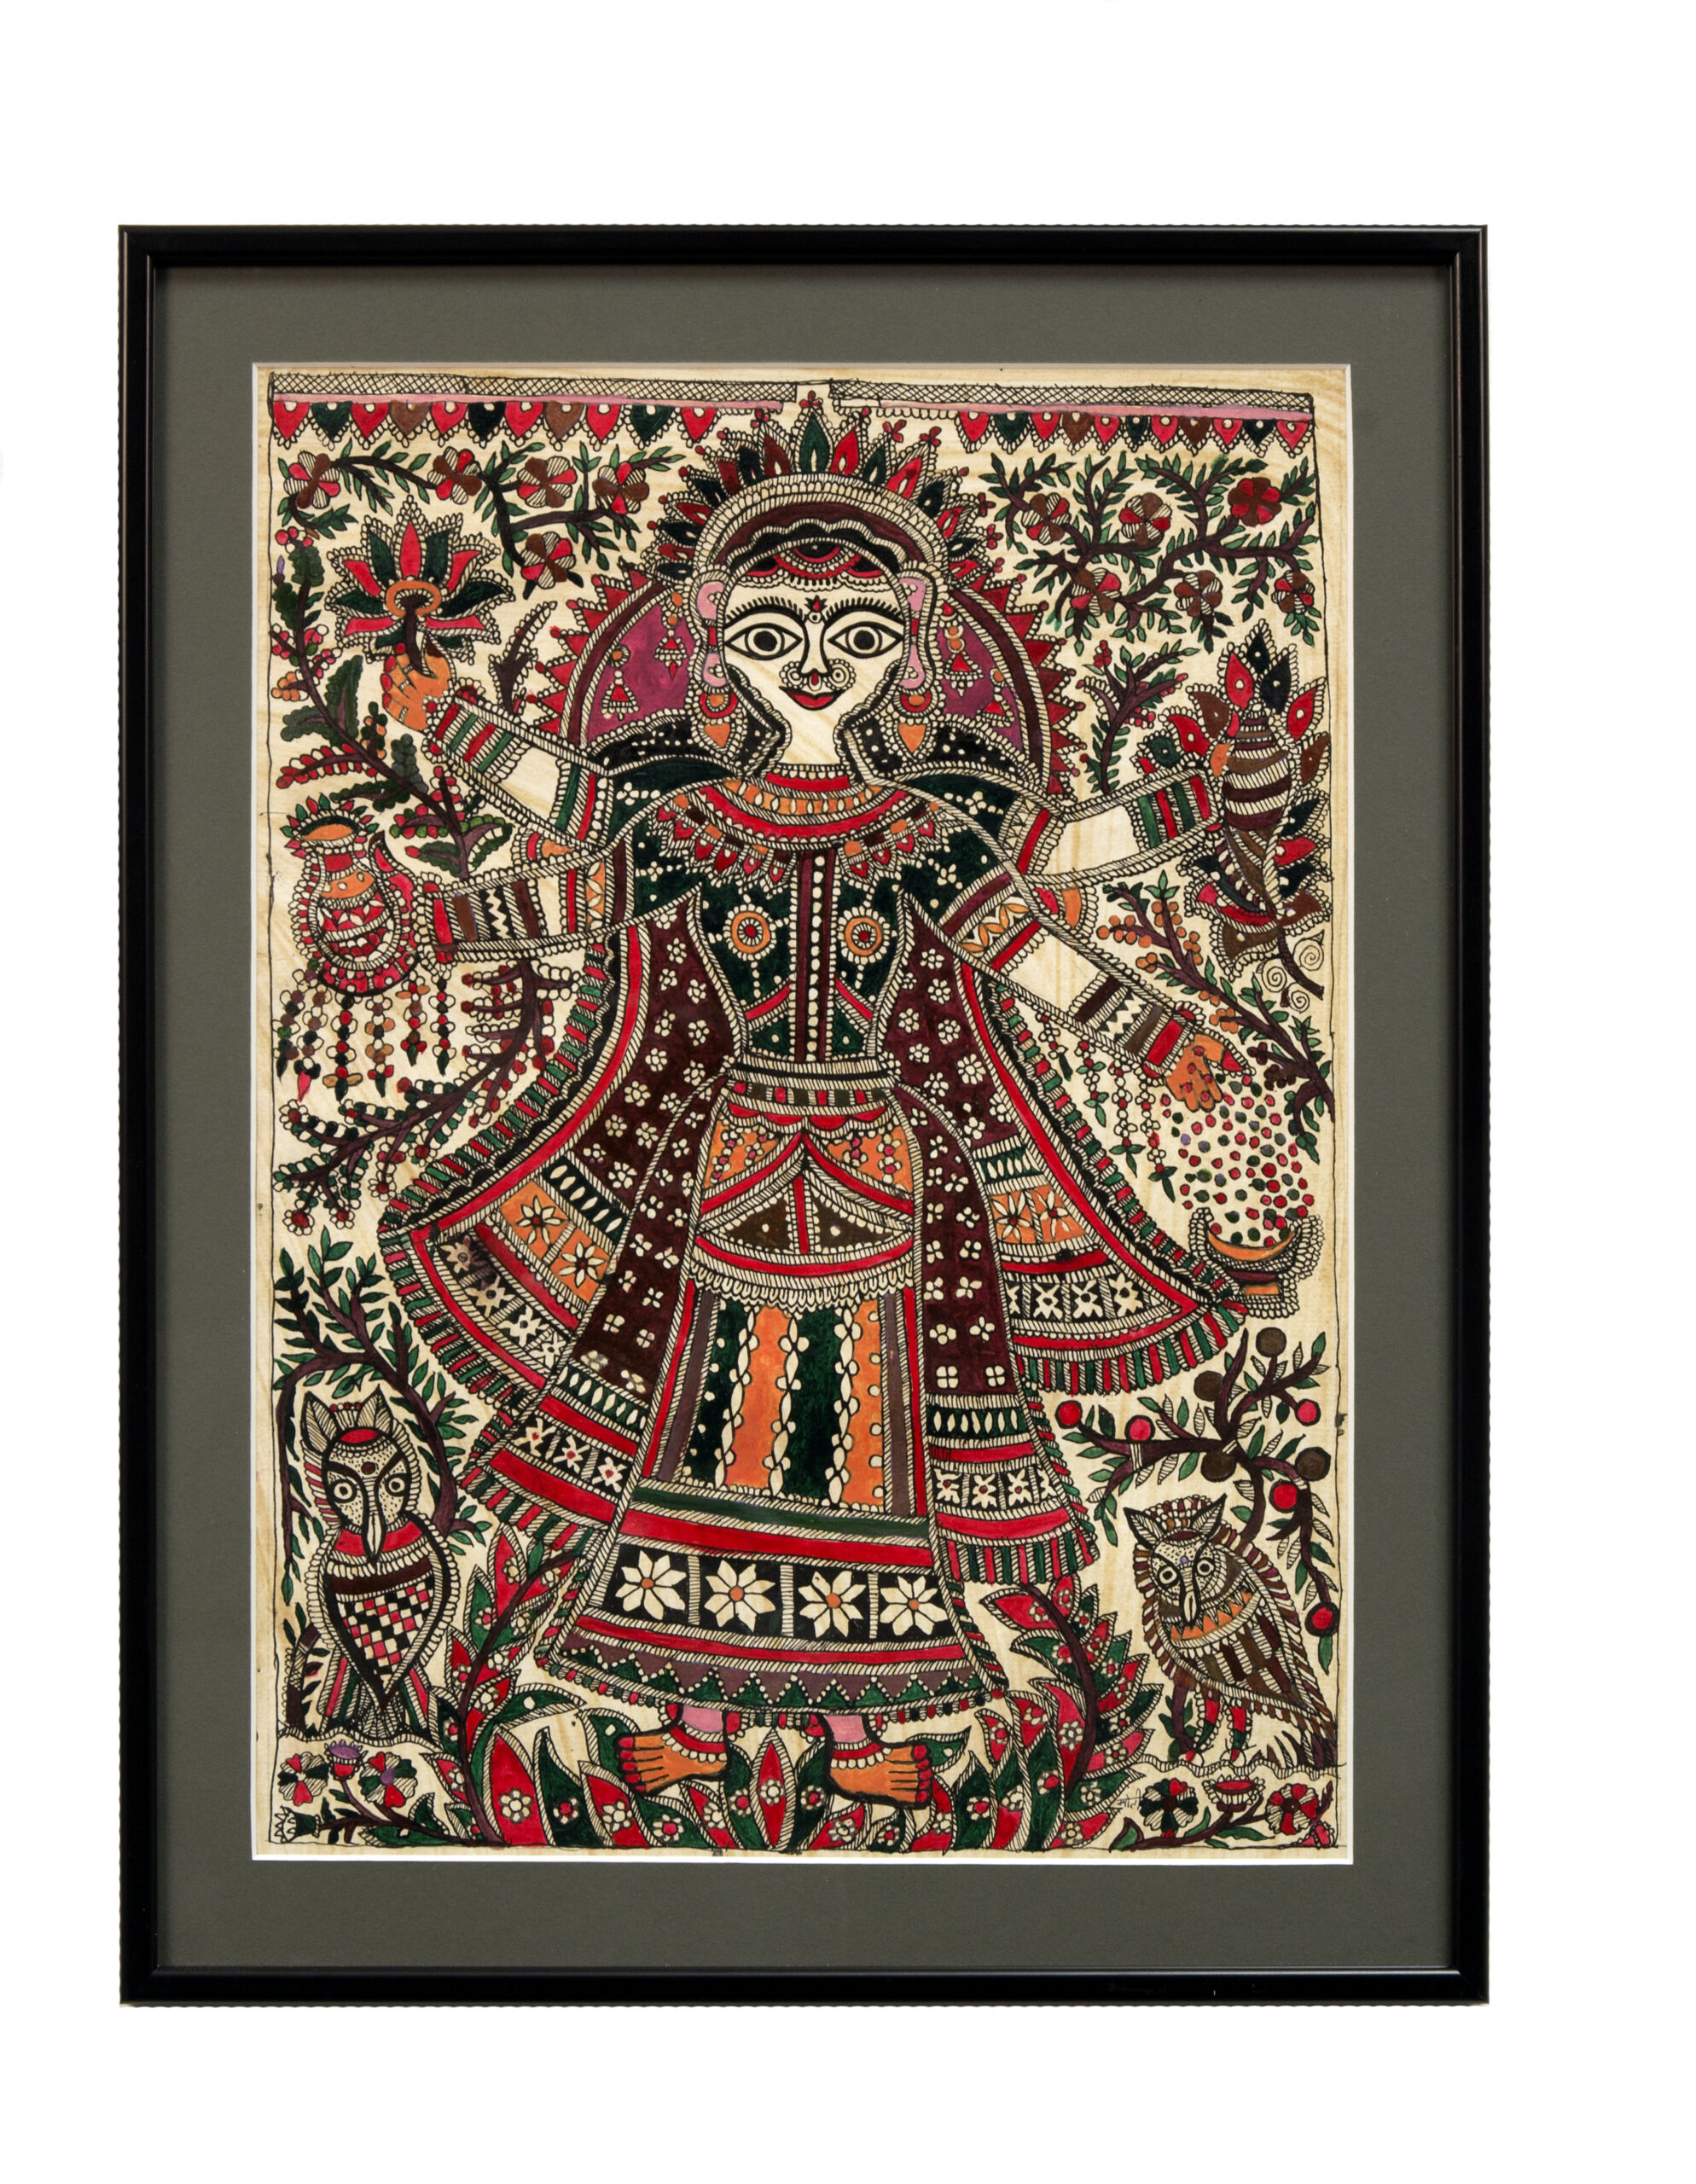 Moti Karn, Madhubani - Goddess of Wealth, 2018, 38 x 28cm